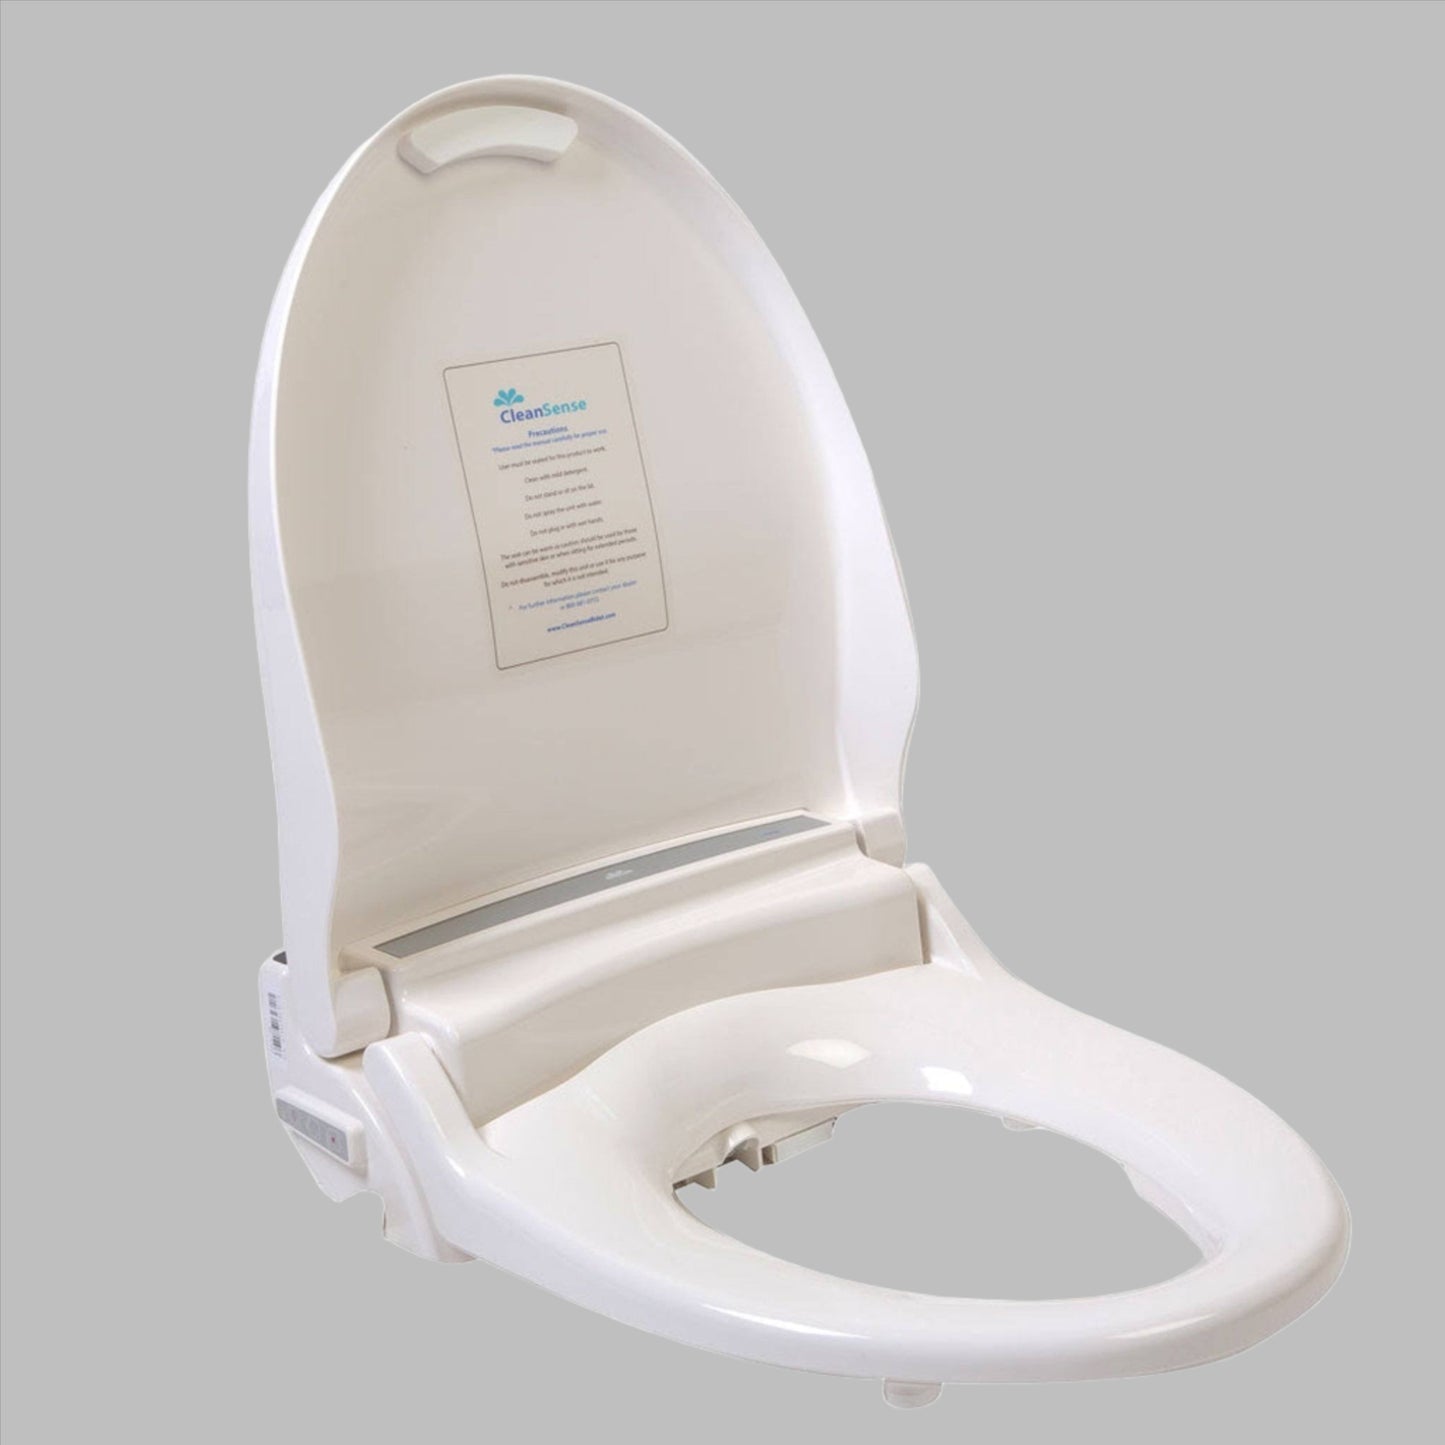 Clean Sense DIB-1500R Smart Bidet Toilet Seat